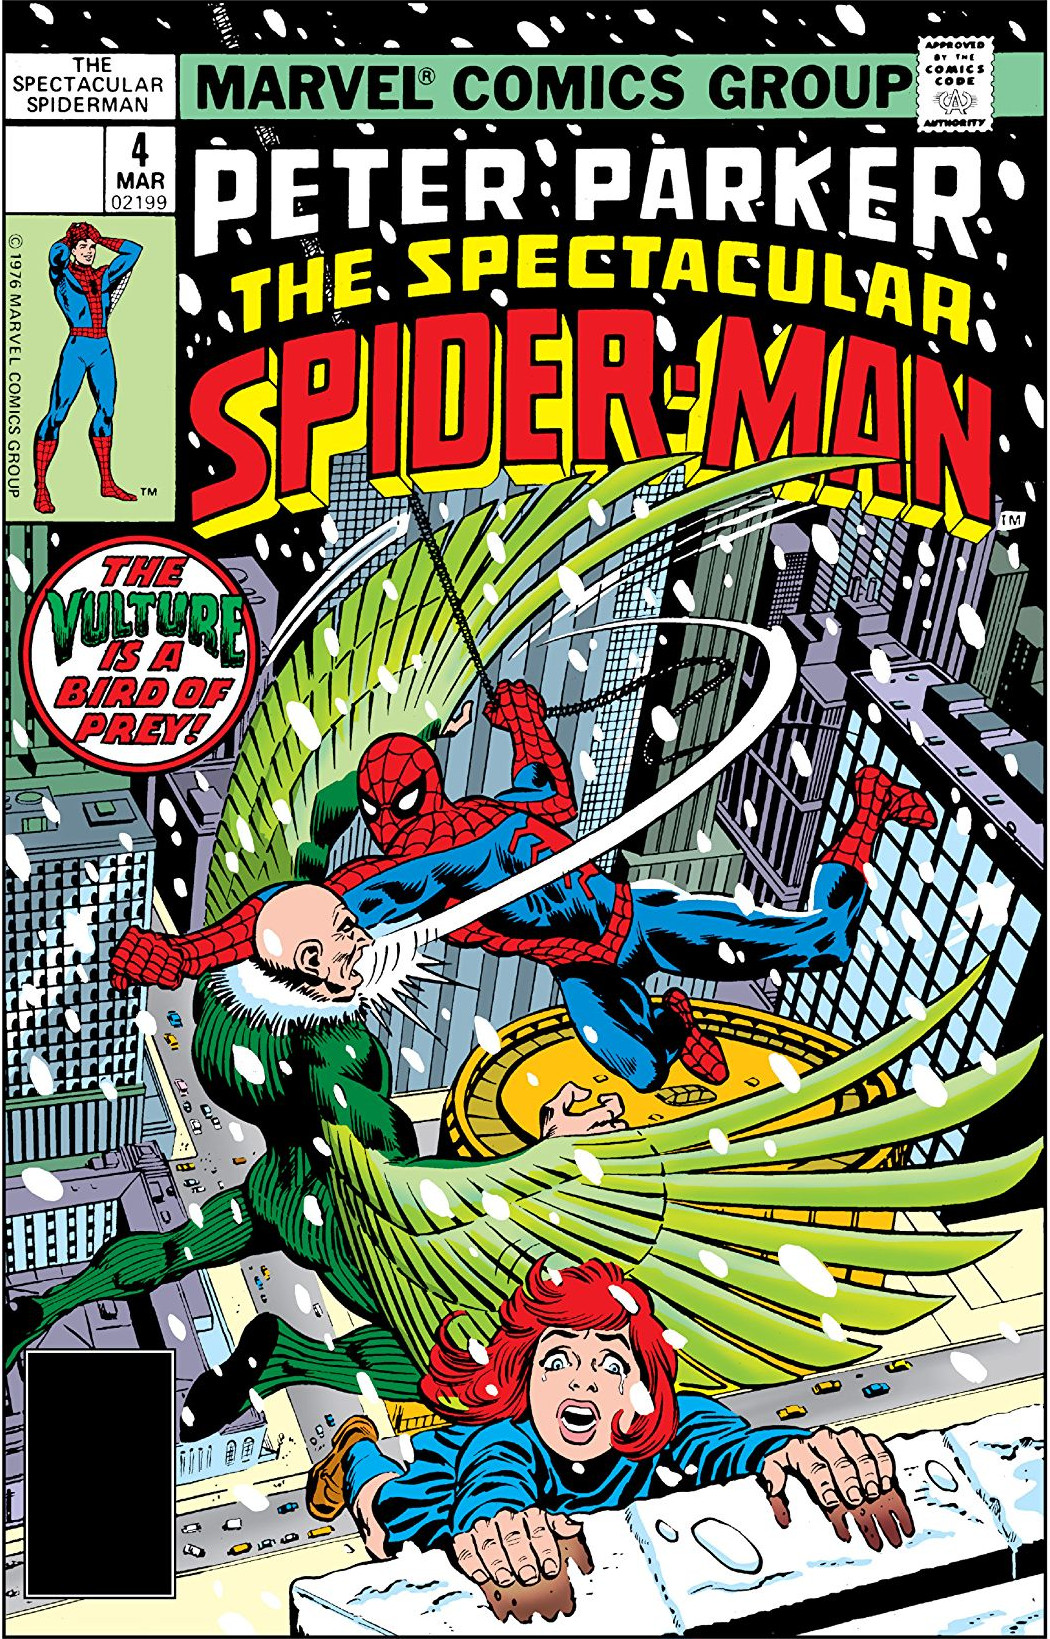 Perter Parker Spectacular Spider-Man #4 Marvel Comics CB9071 